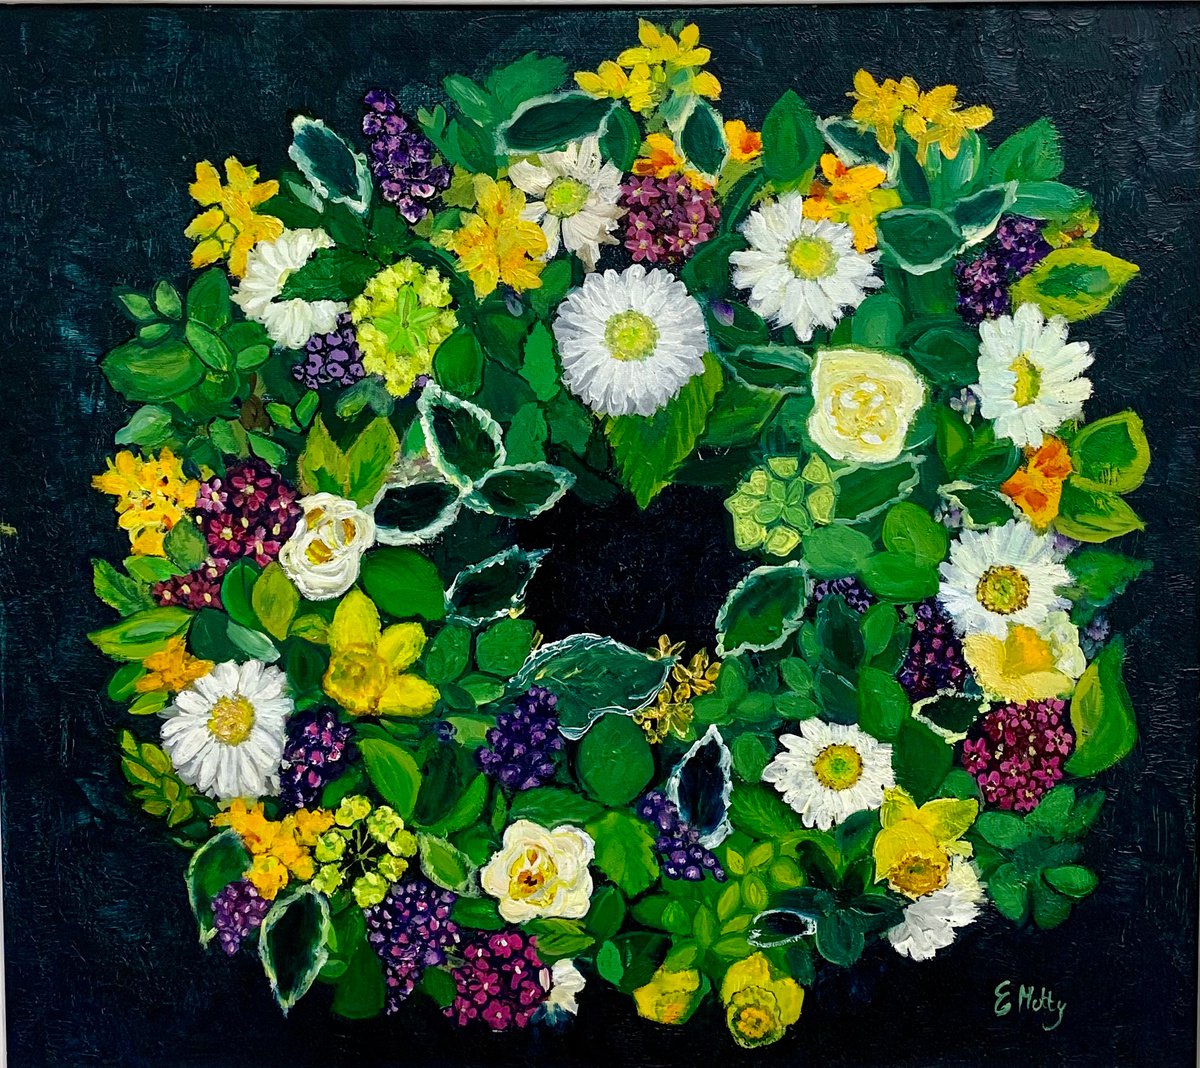 The floral wreath by Elisabetta Mutty